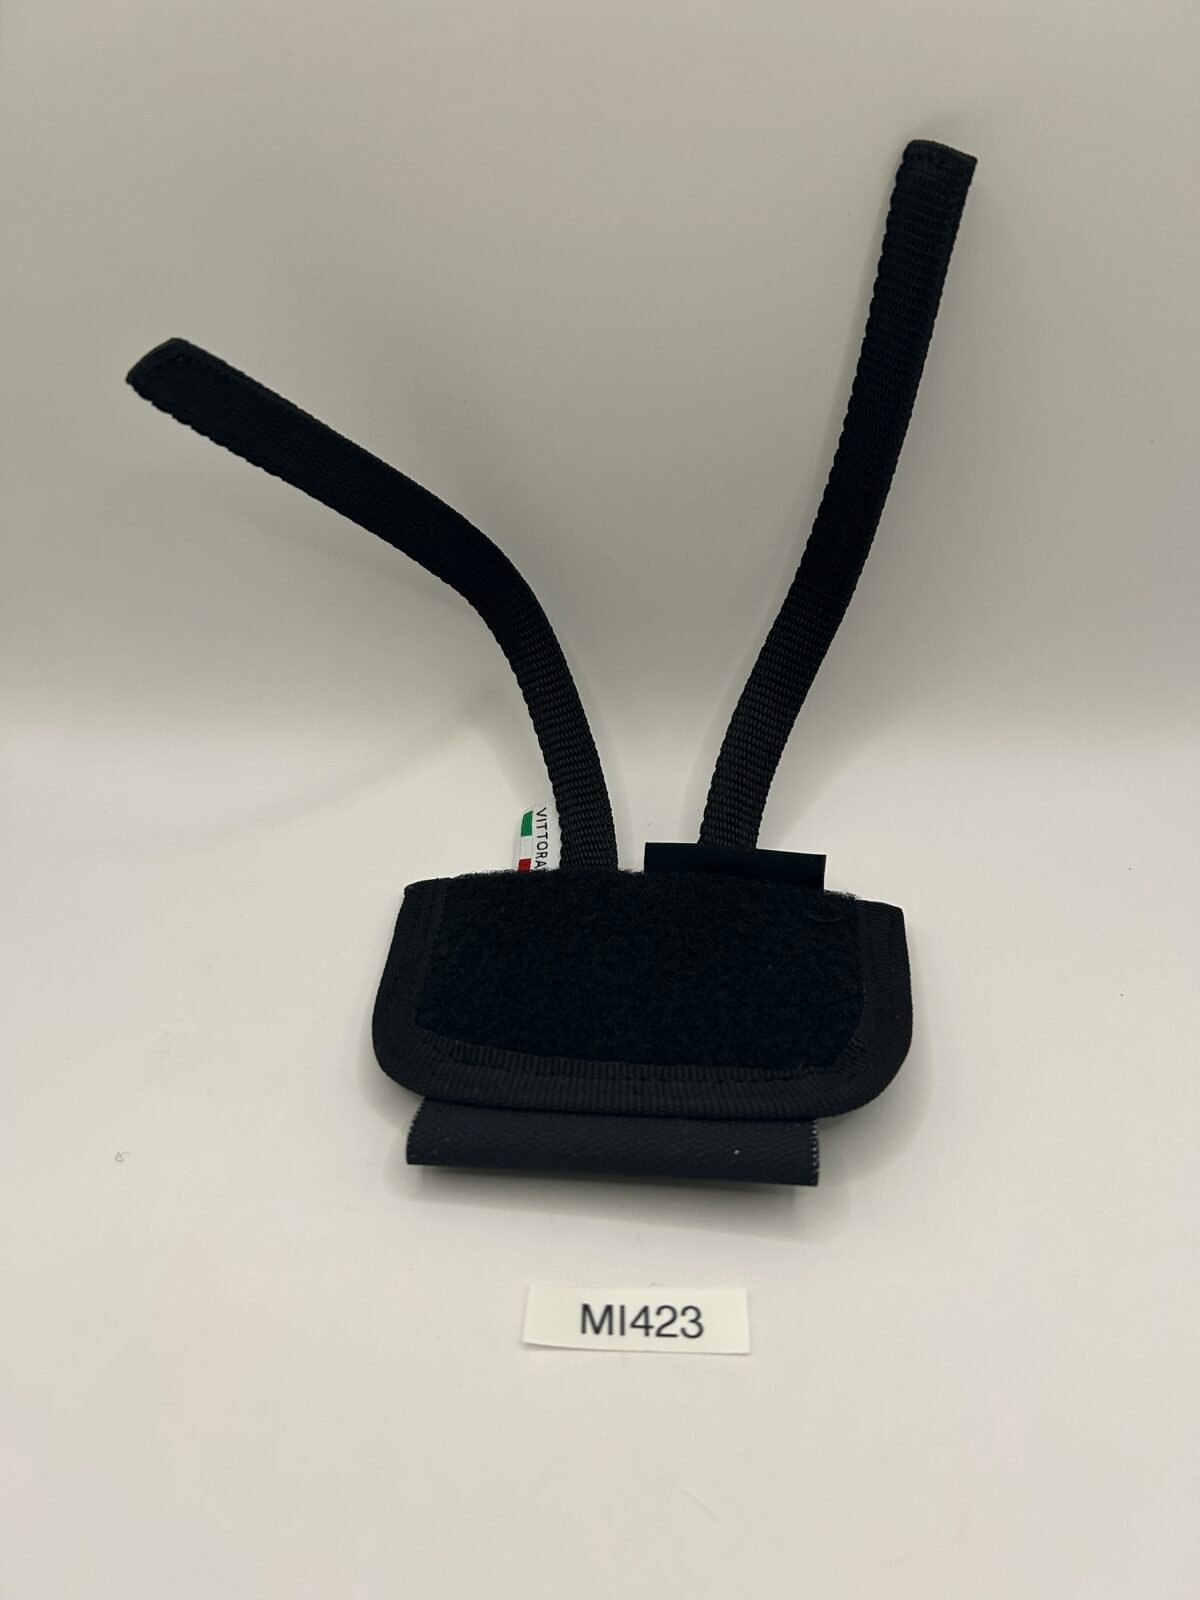 MI423 MosterEFI Fabric Display Holder